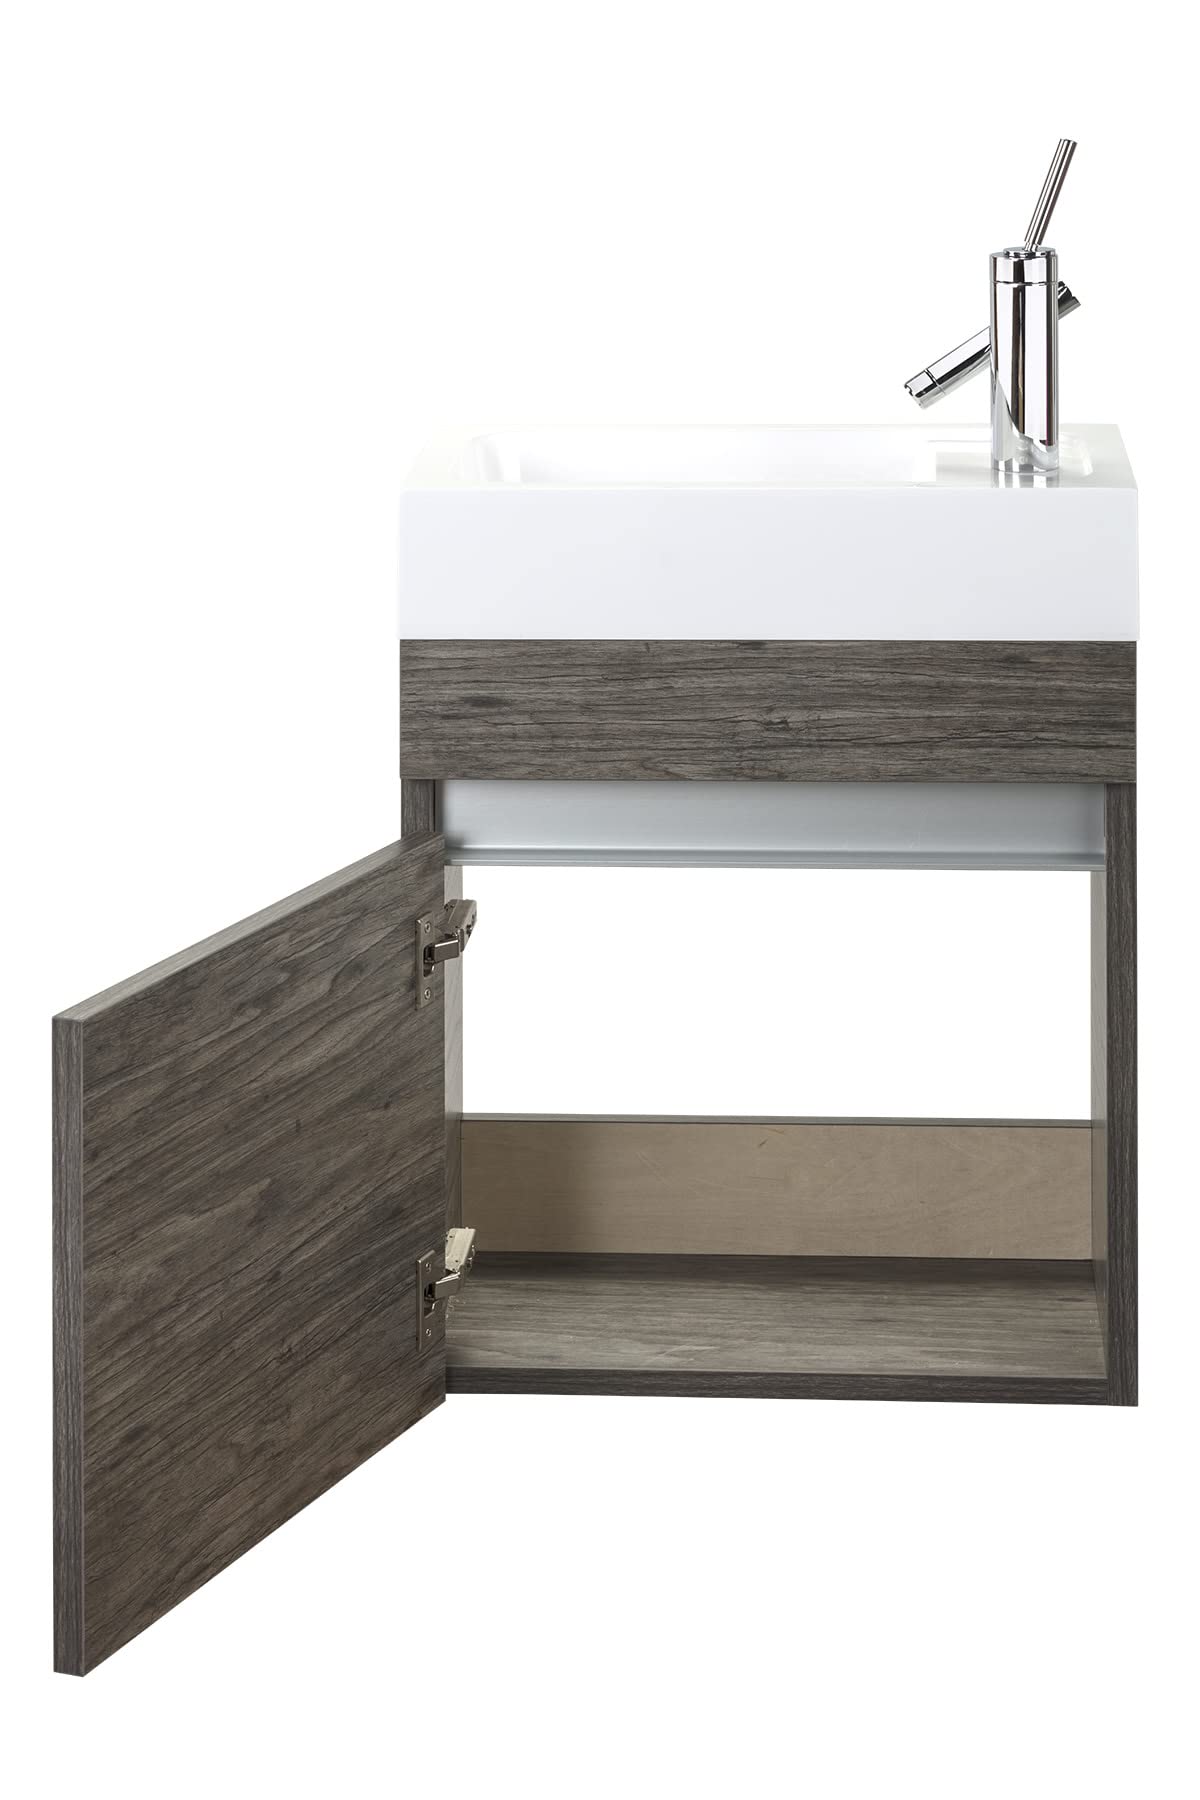 Cutler Kitchen and Bath Sangallo Space Saver Bathroom Vanity, 18 Inches